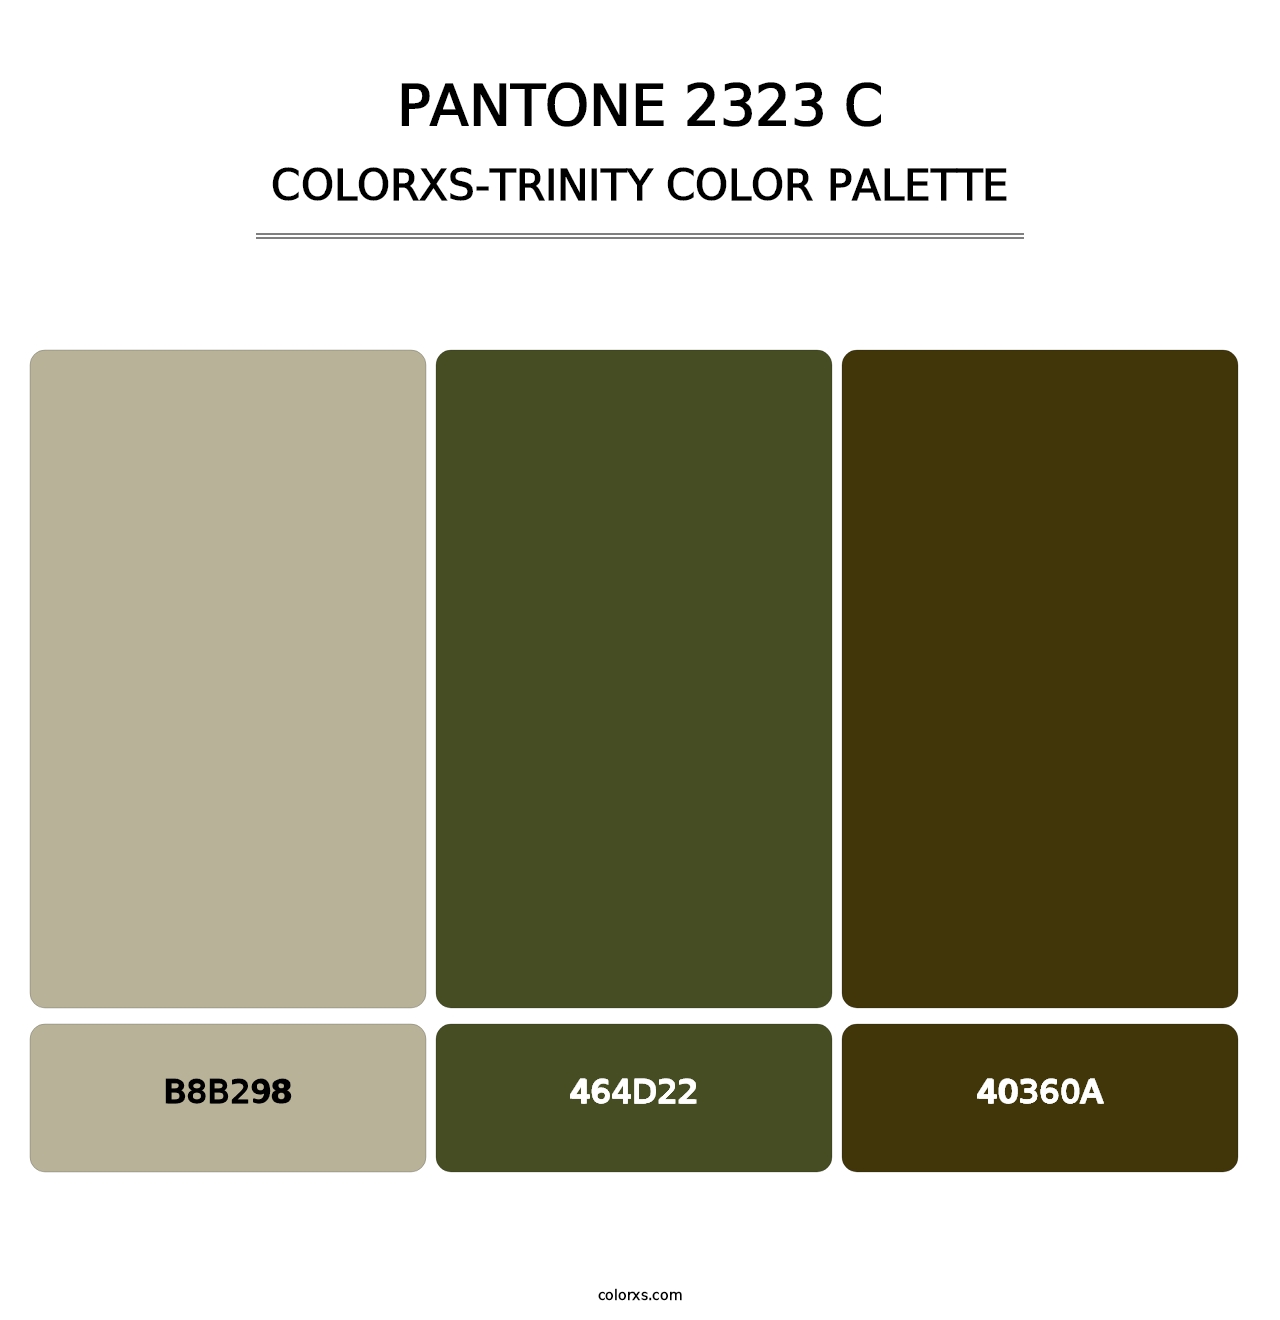 PANTONE 2323 C - Colorxs Trinity Palette